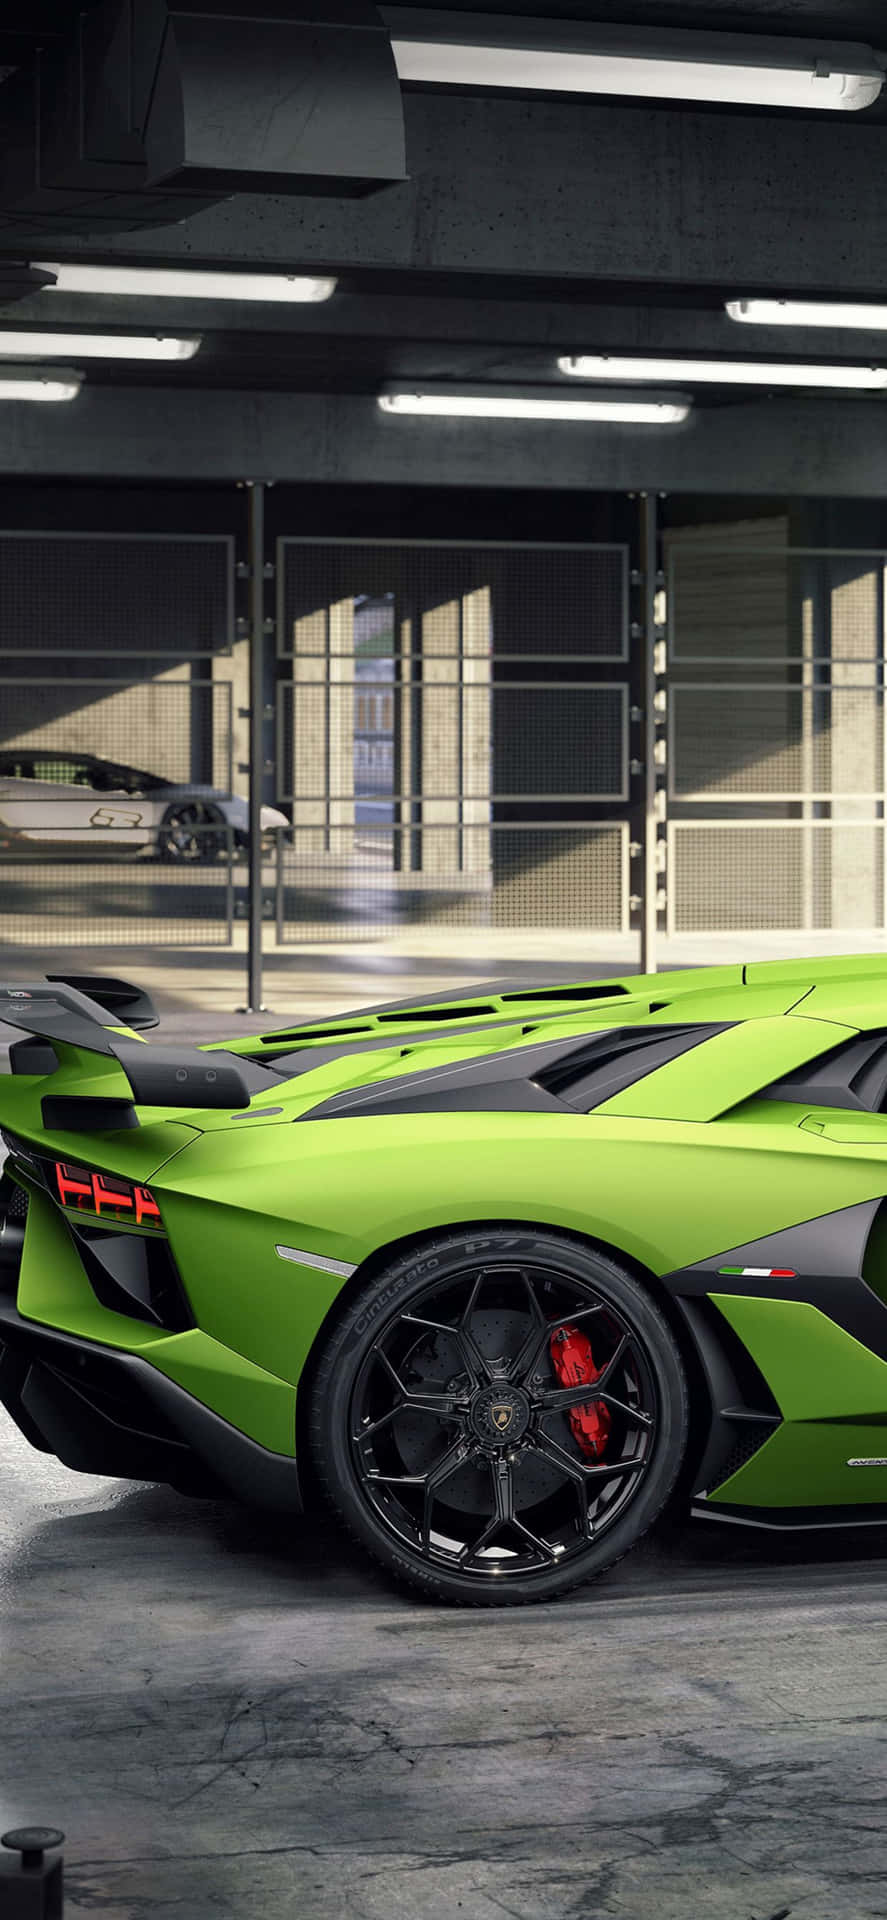 Nyd luksuslivet i en grøn Lamborghini. Wallpaper